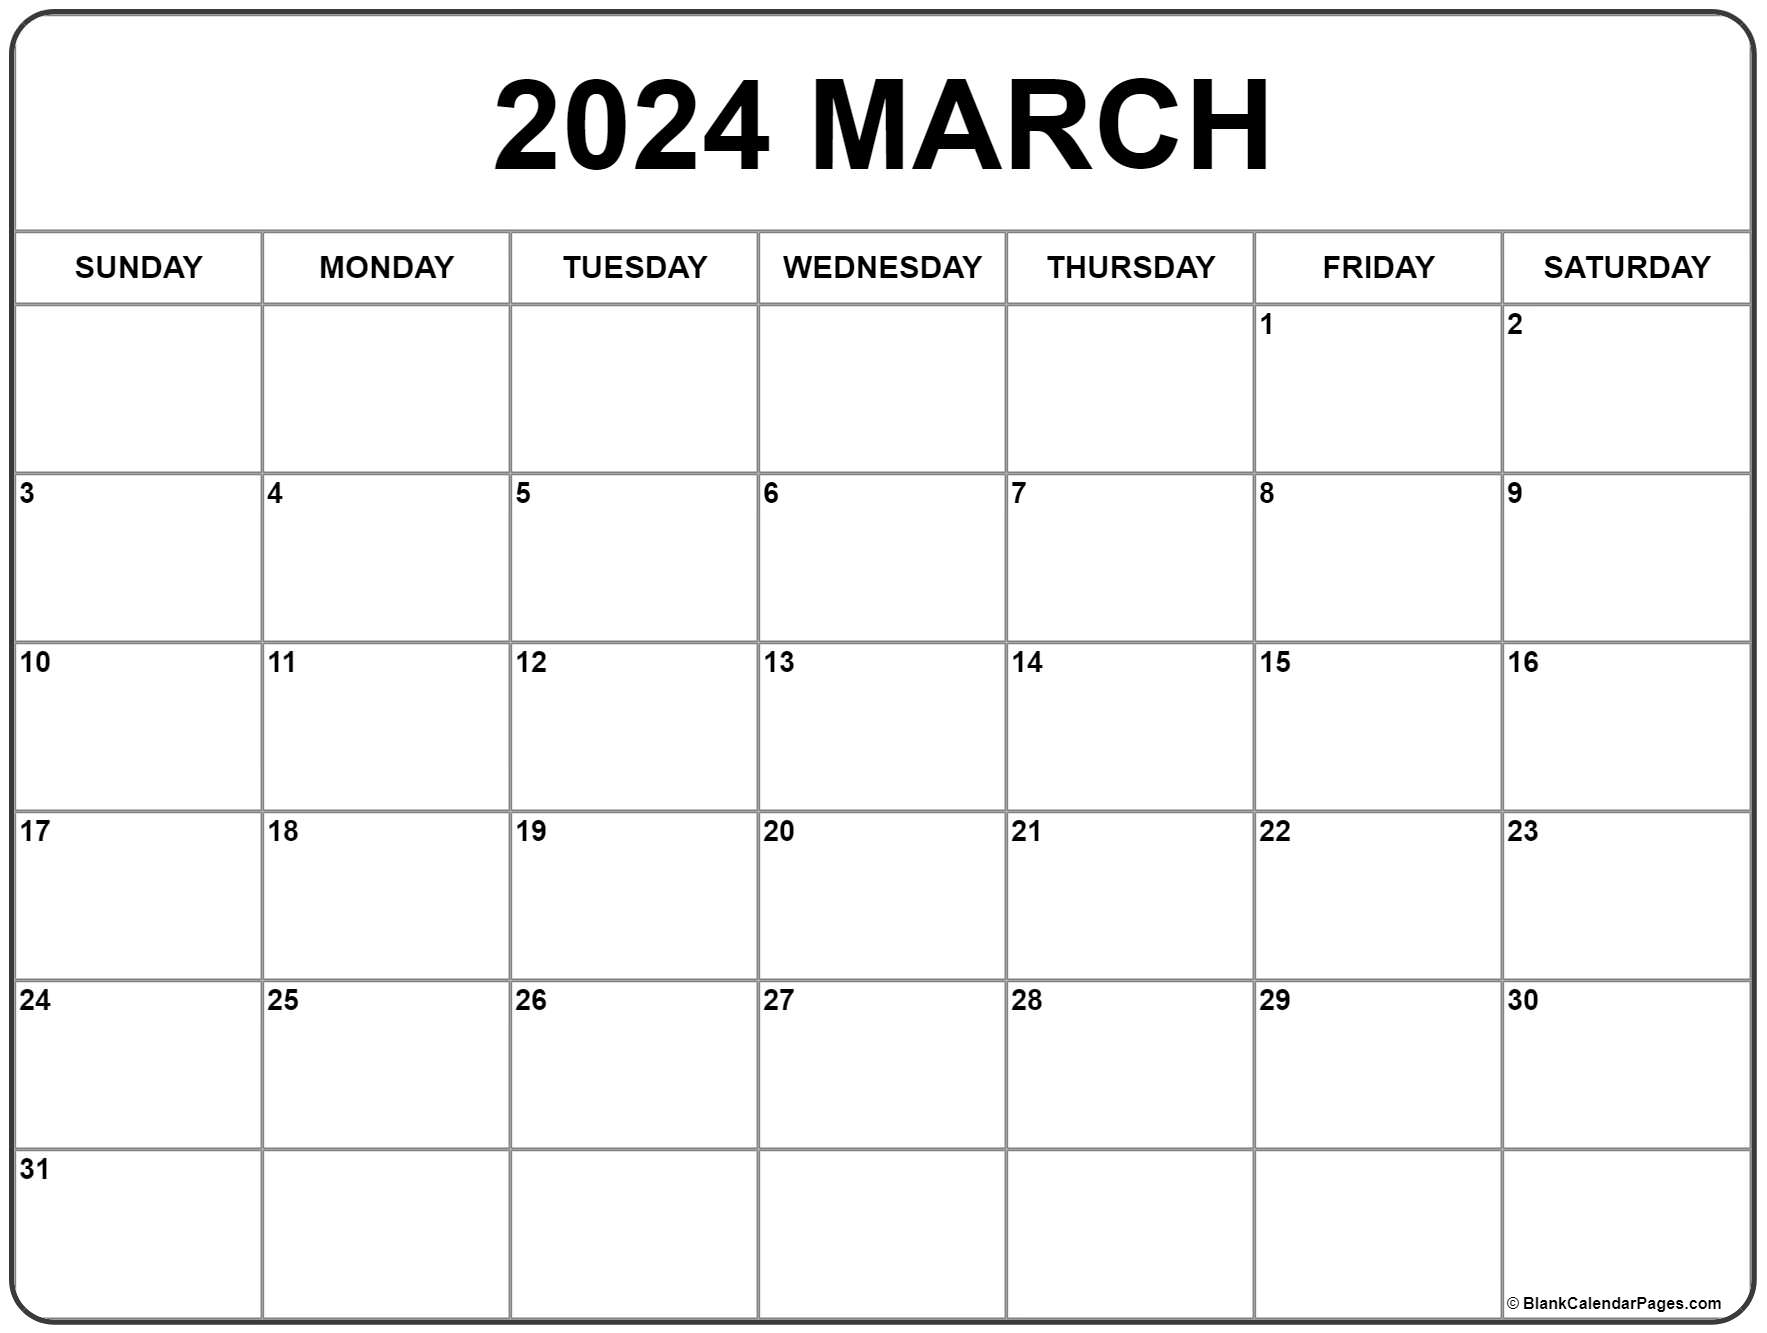 Free March 2022 Calendar Template March 2022 Calendar | Free Printable Calendar Templates